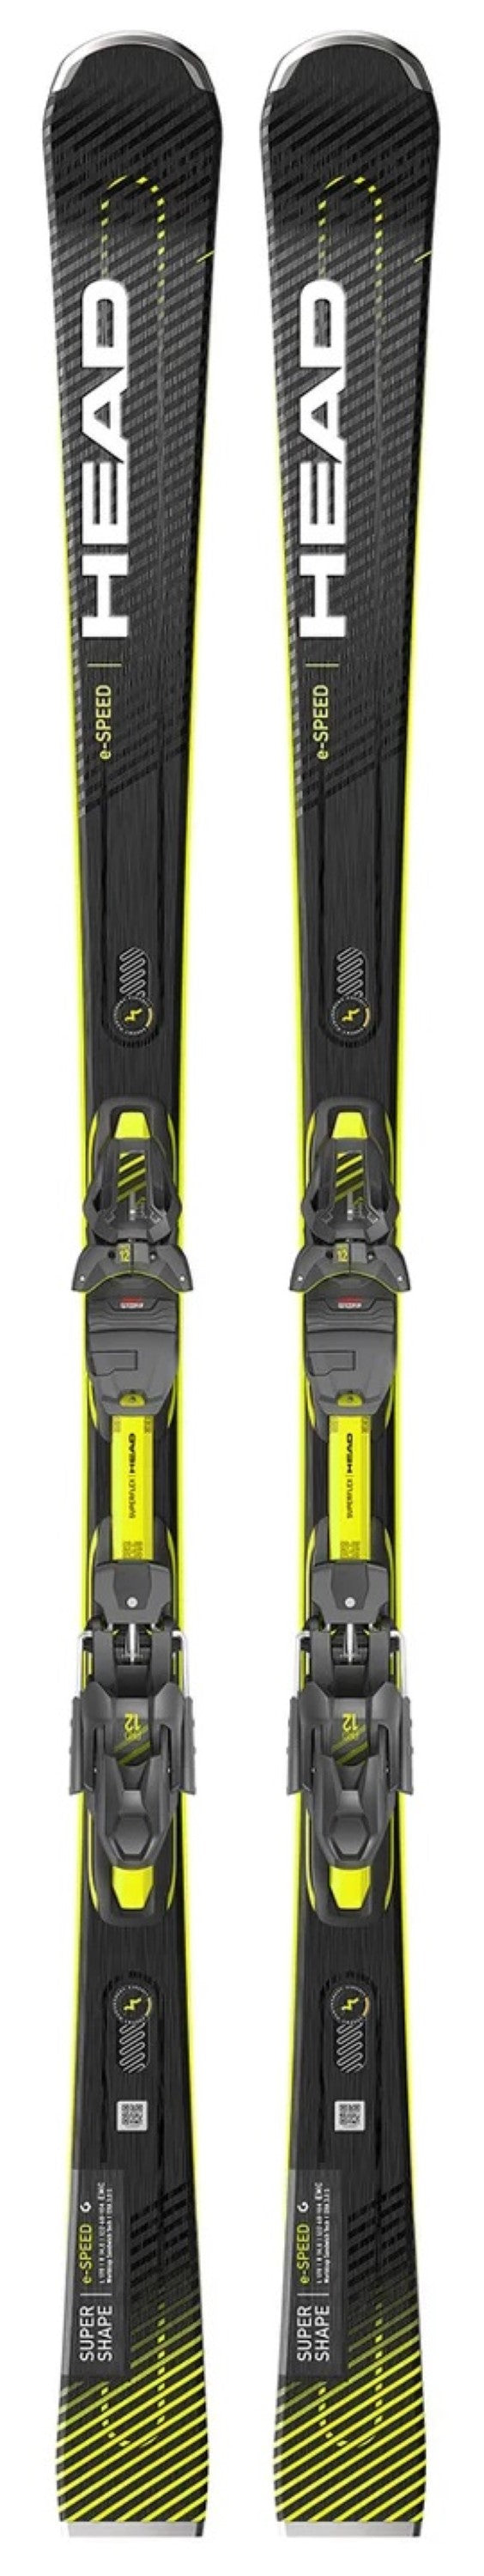 Head SUPERSHAPE E-SPEED Ski + Bindung PRD 12 GW Superflex neon yellow black Herren